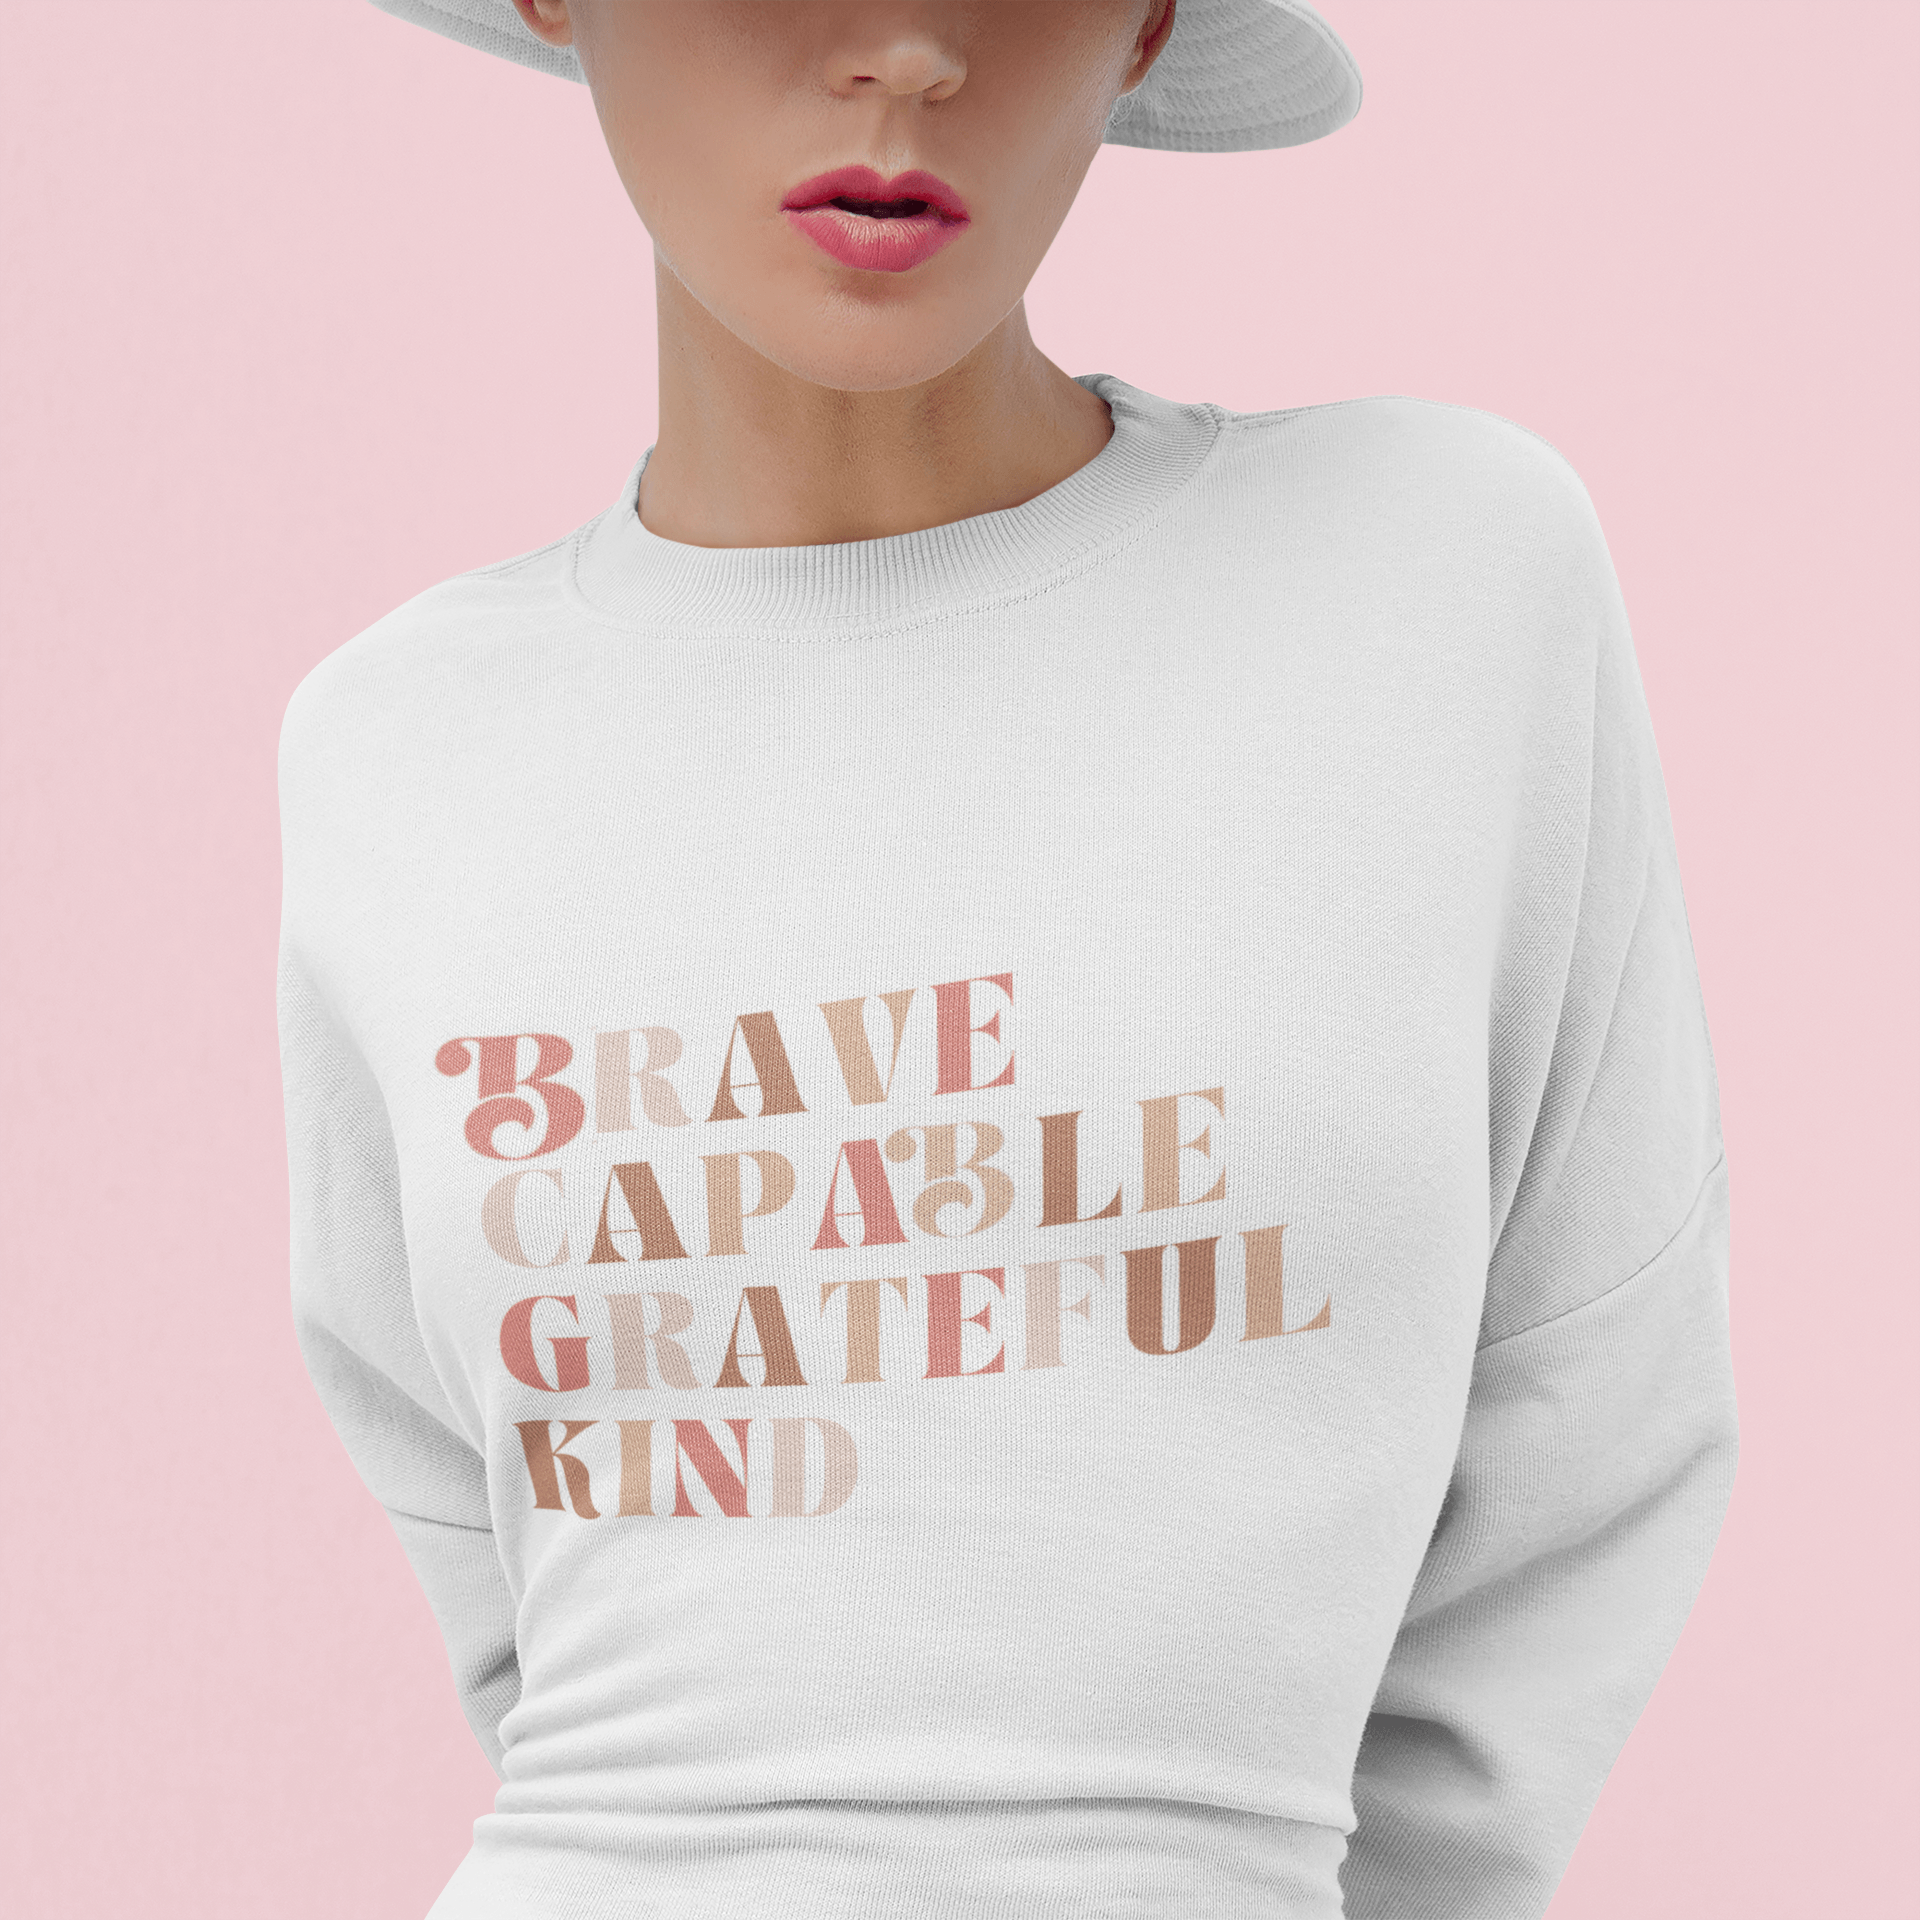 Brave, Capable, Grateful Kind Unisex Fit Crewneck Sweatshirt - The Kindness Cause